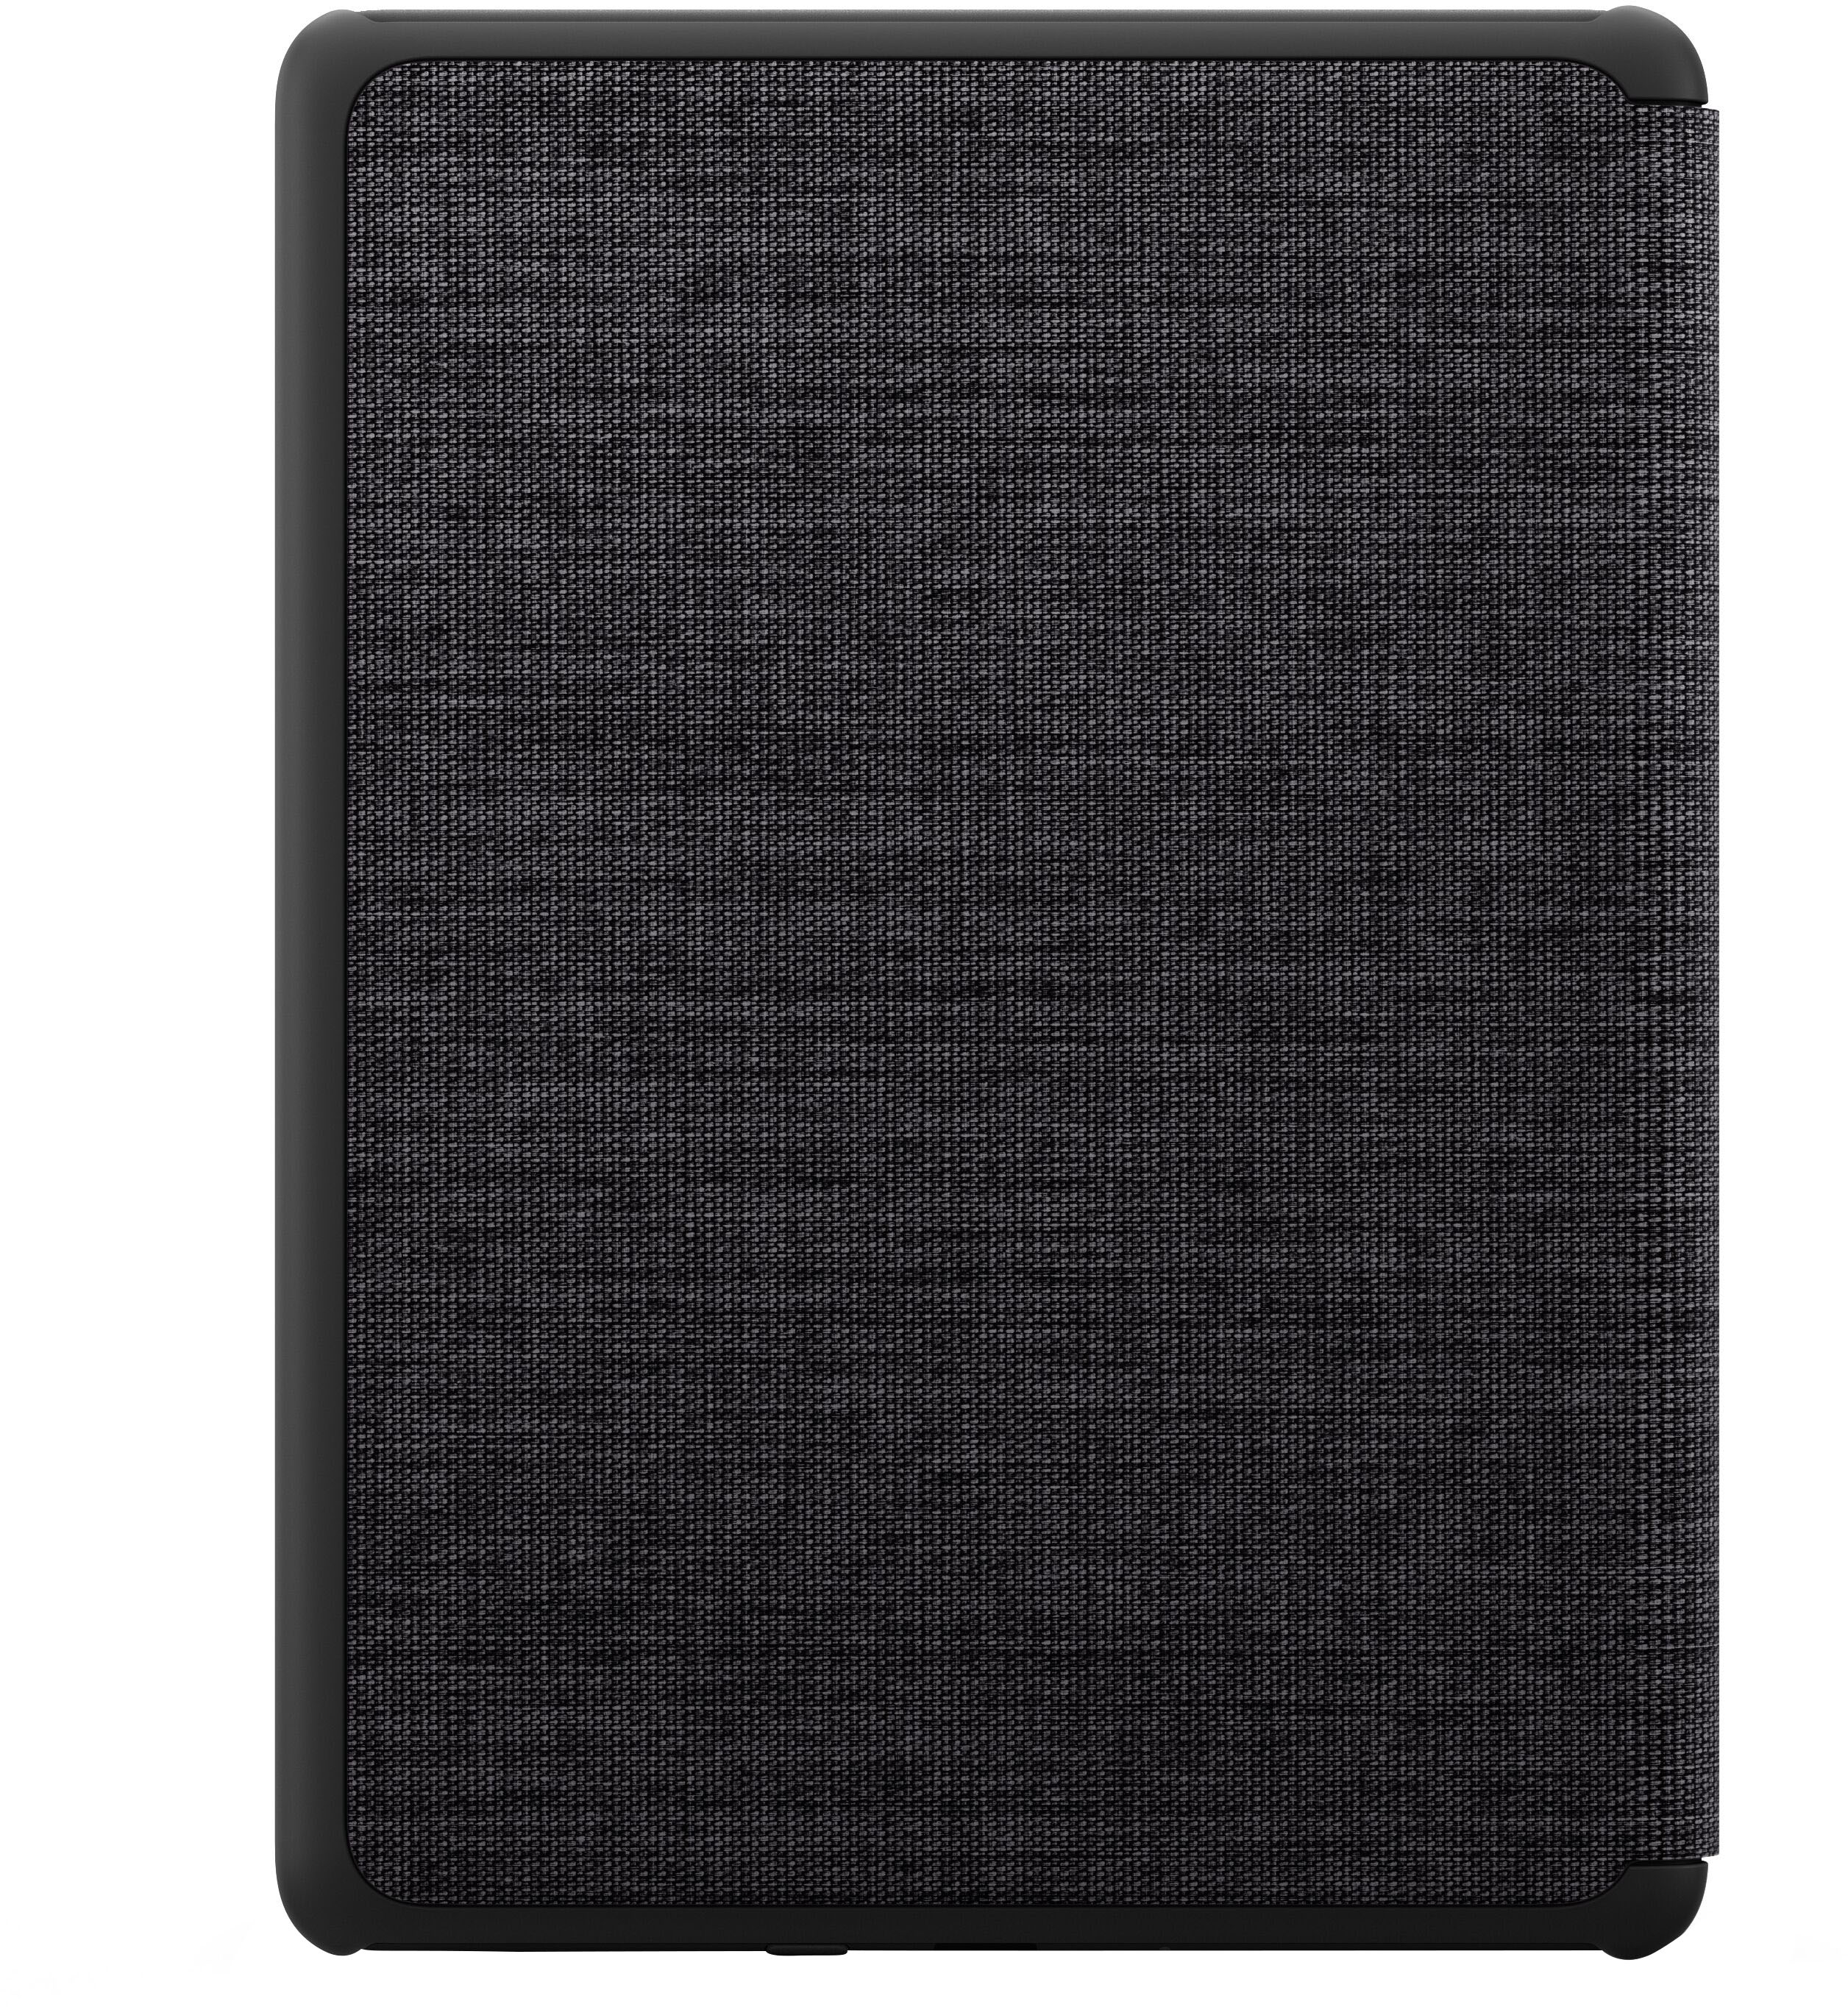 Kindle Paperwhite Fabric Case (11th Generation-2021) Black